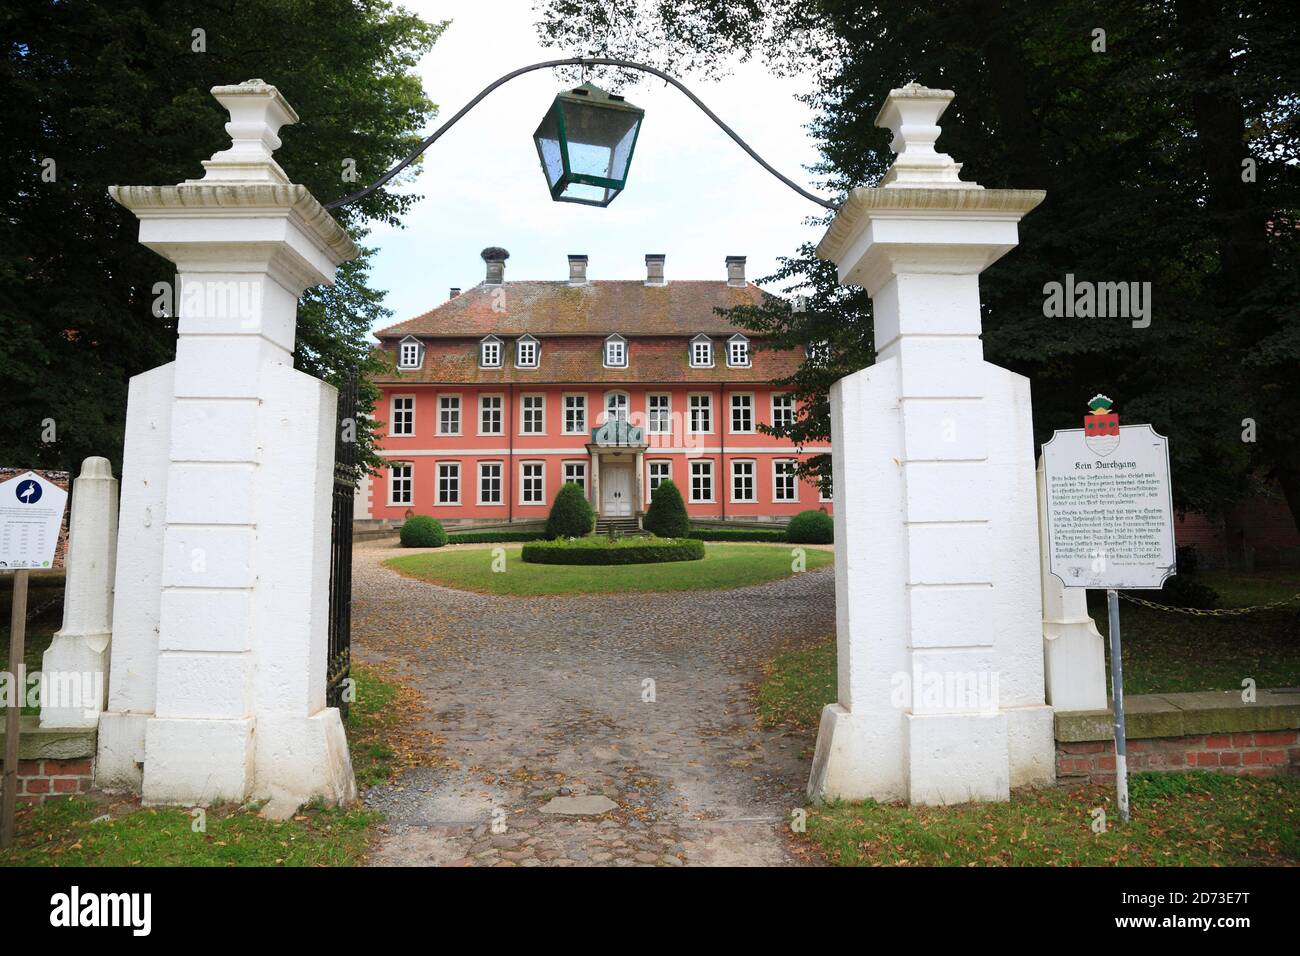 Gartow Mansion, Gartow, Lüchow-Dannenberg,  Lower Saxony, Germany, Europe Stock Photo